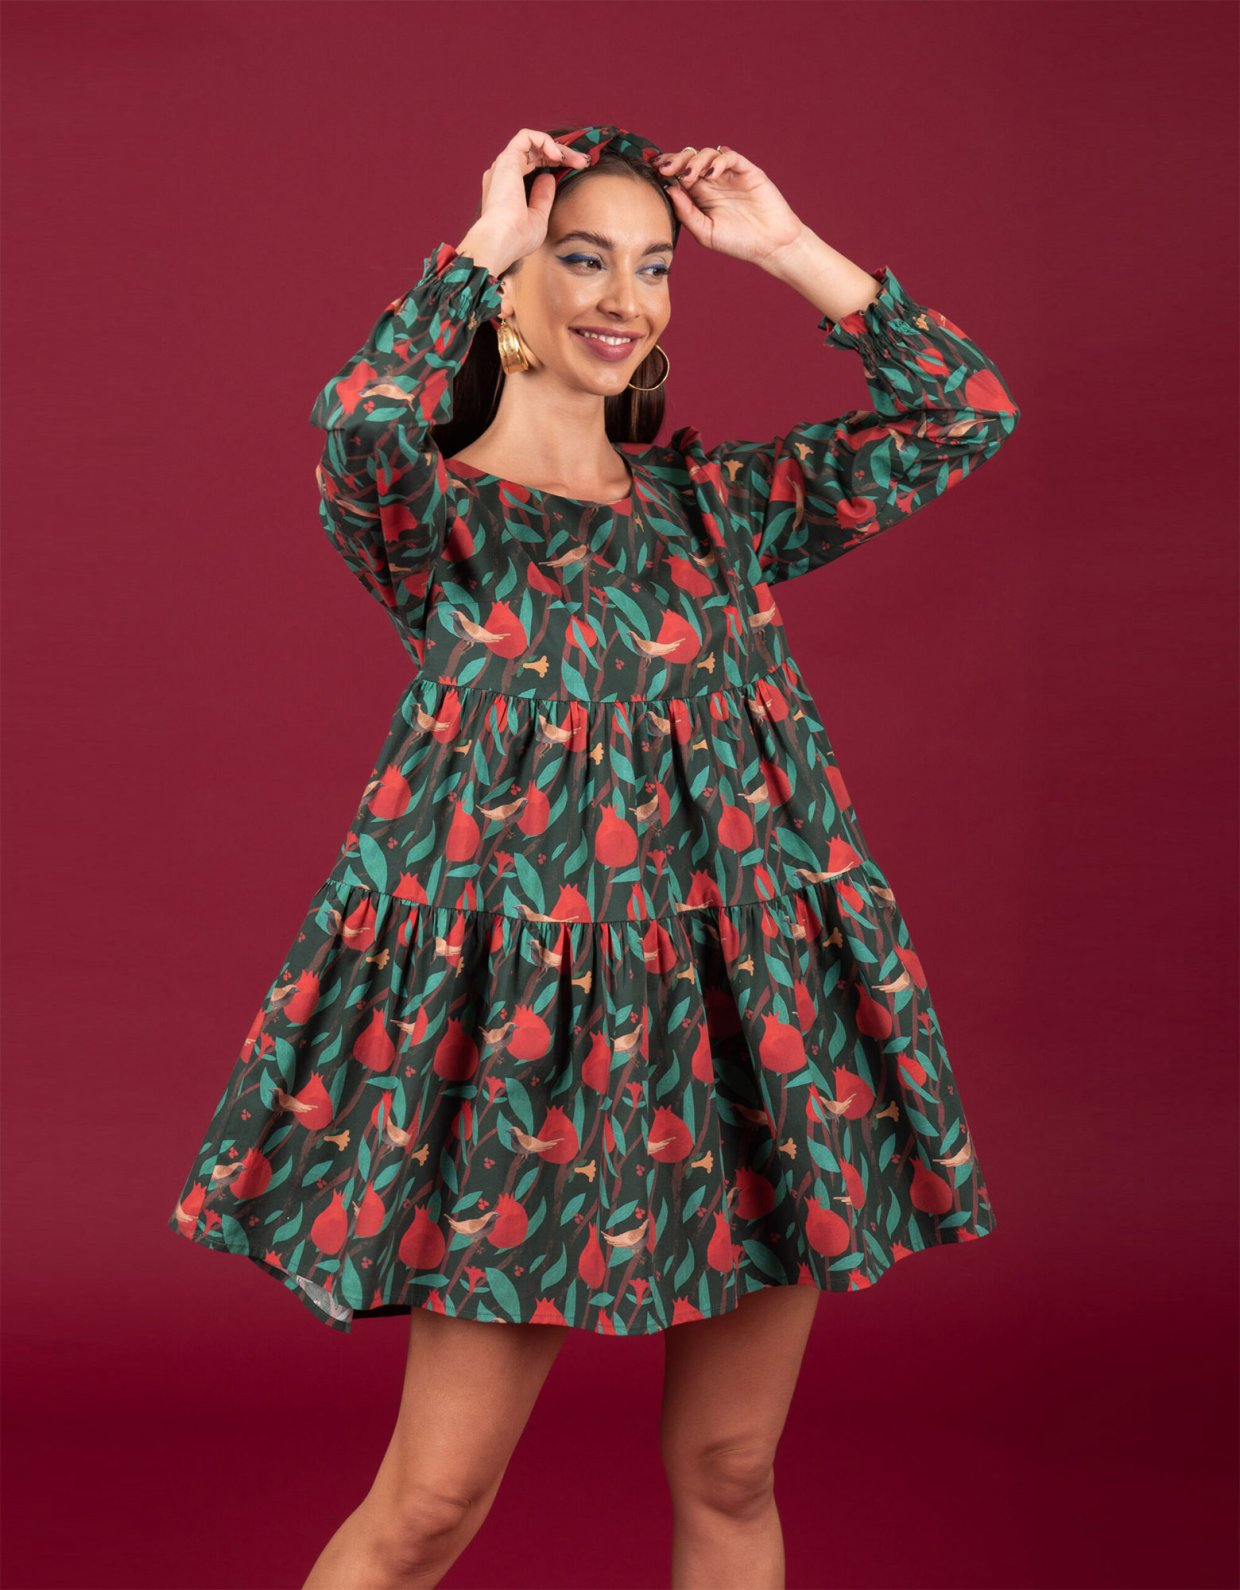 Chaton Pomegranate short dress